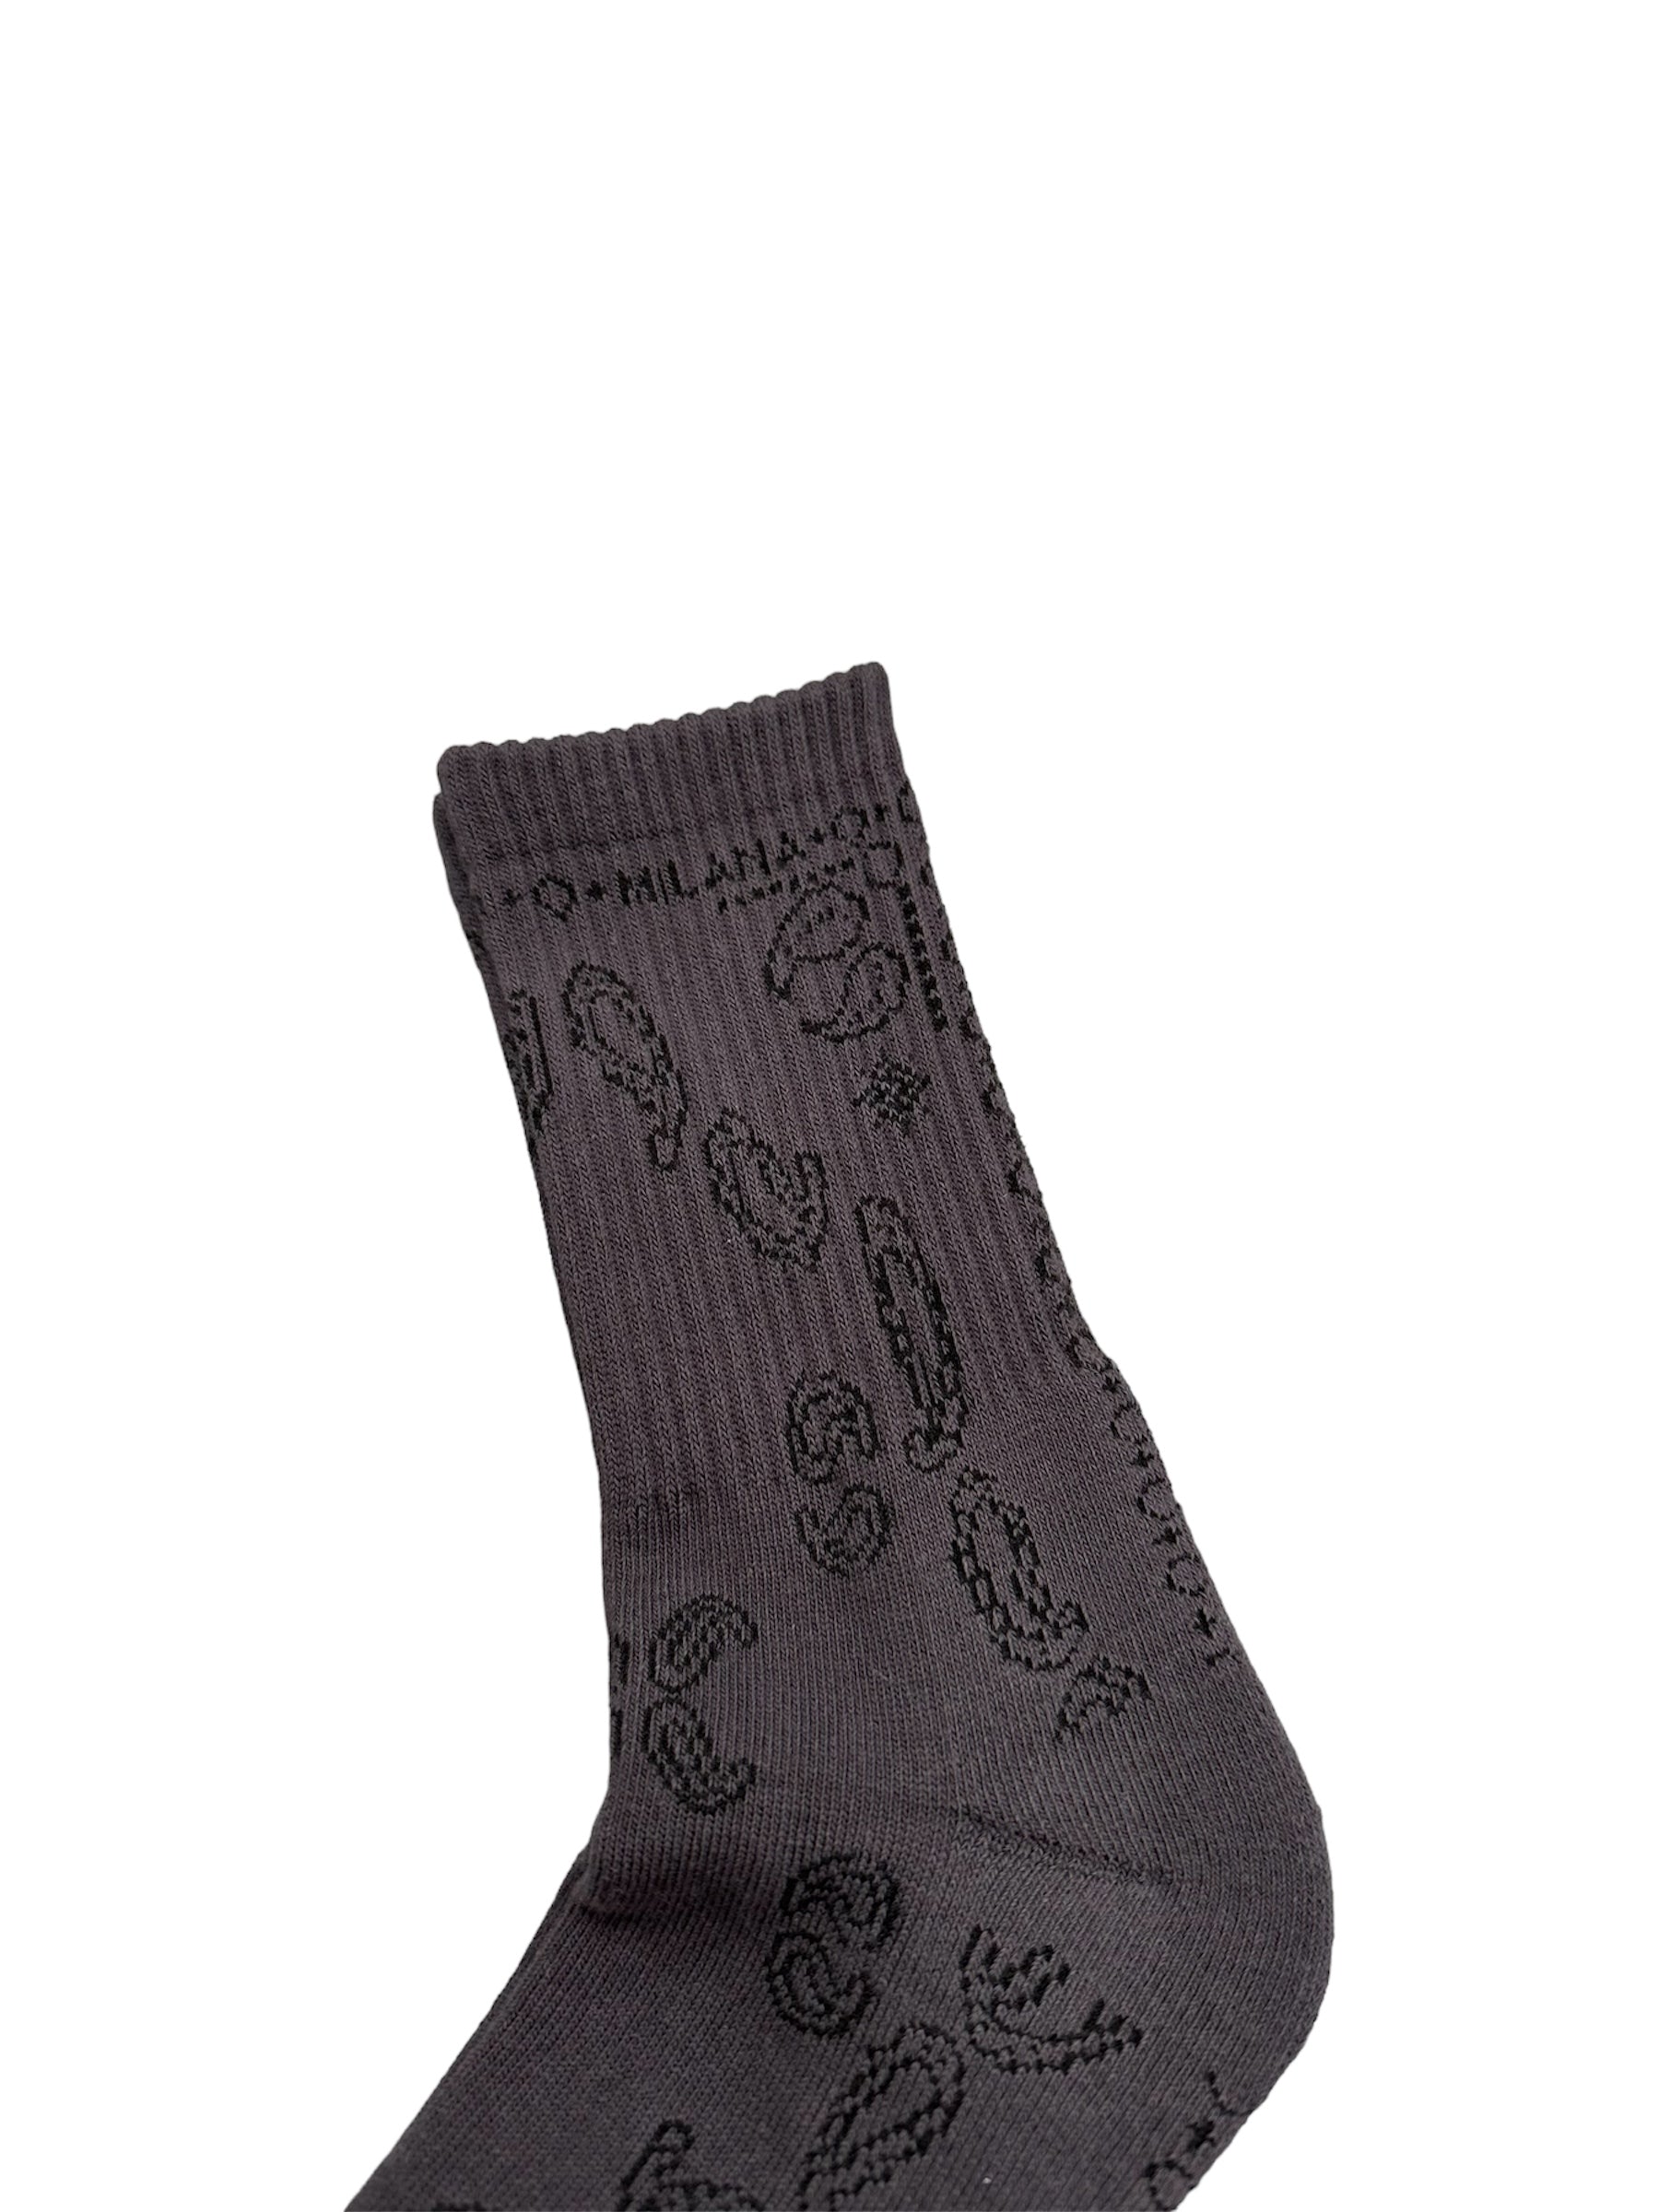 Charcoal Paisley Socks.